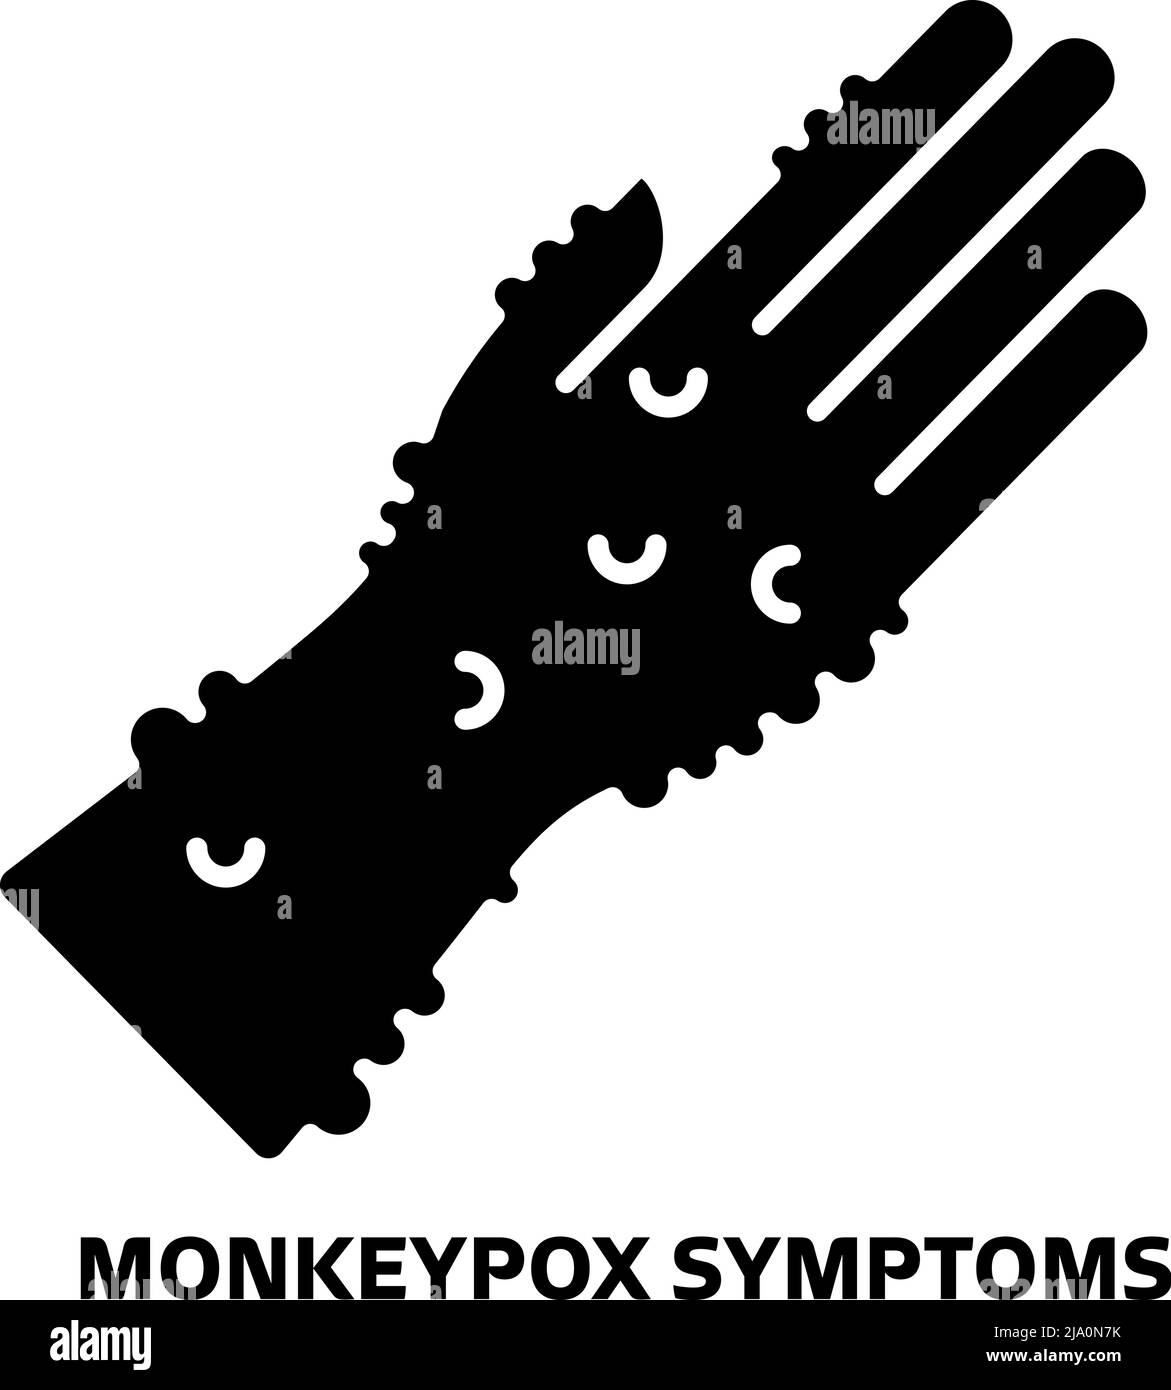 Monkeypox virus skin symptoms Stock Vector